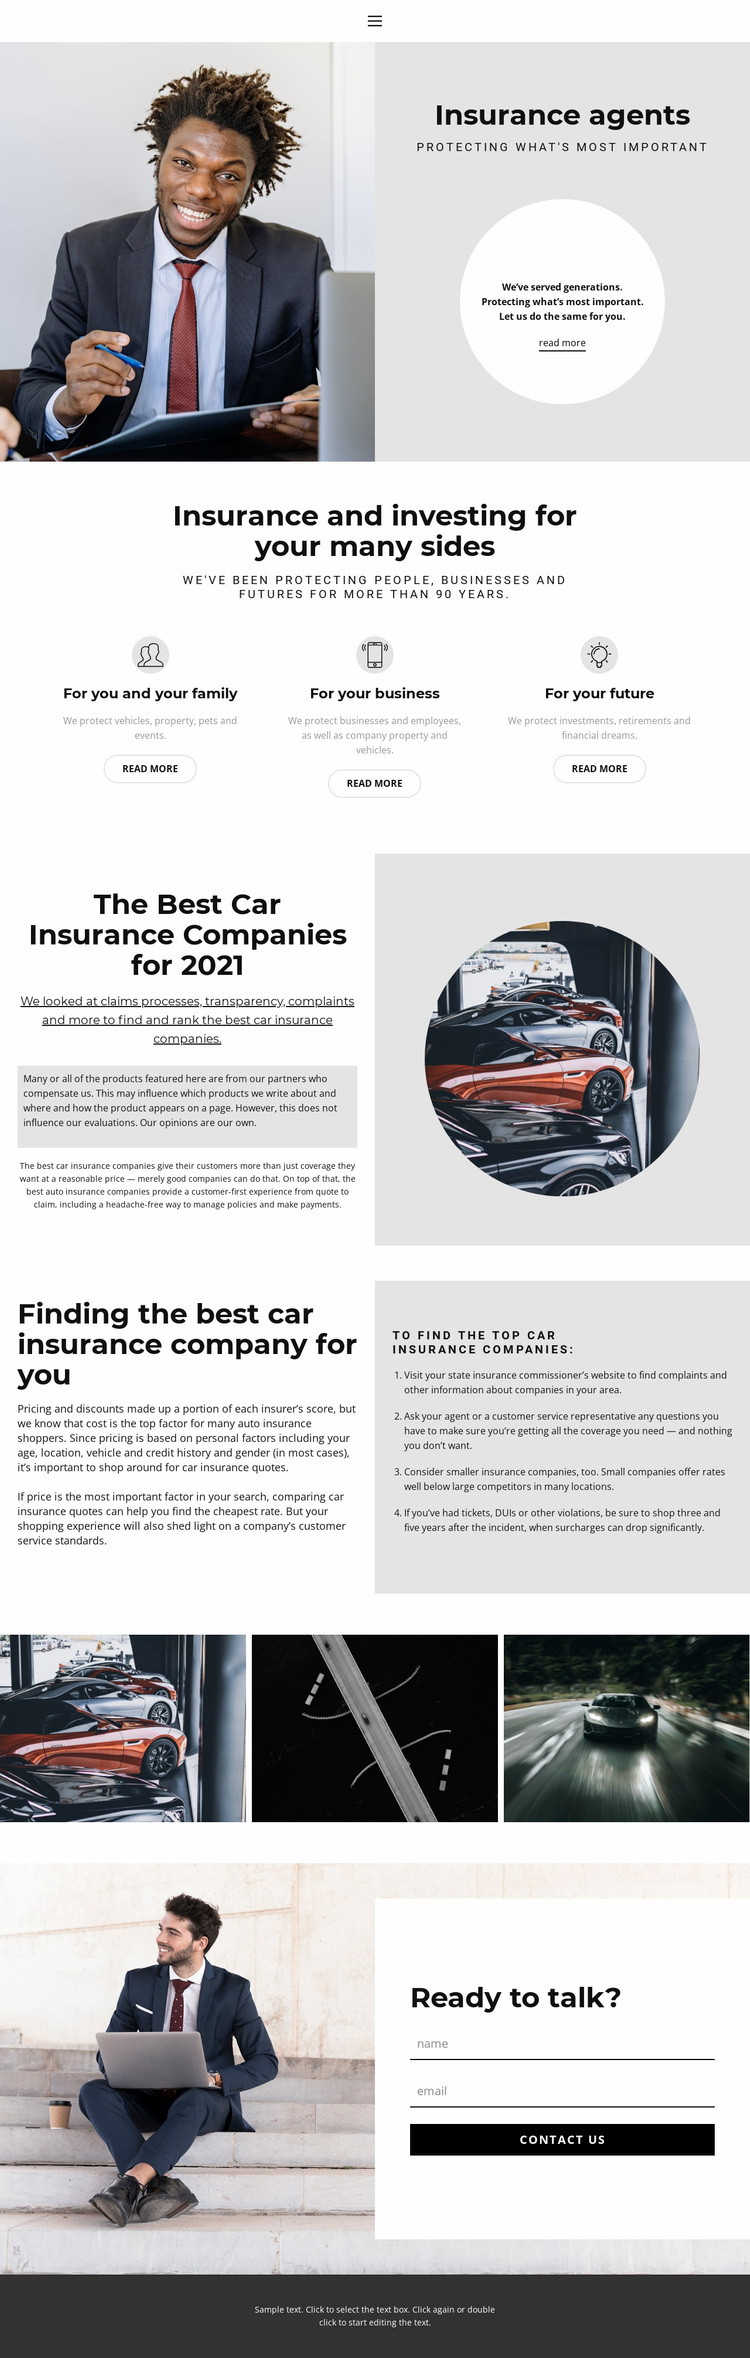 Insurance agents resume Website Design